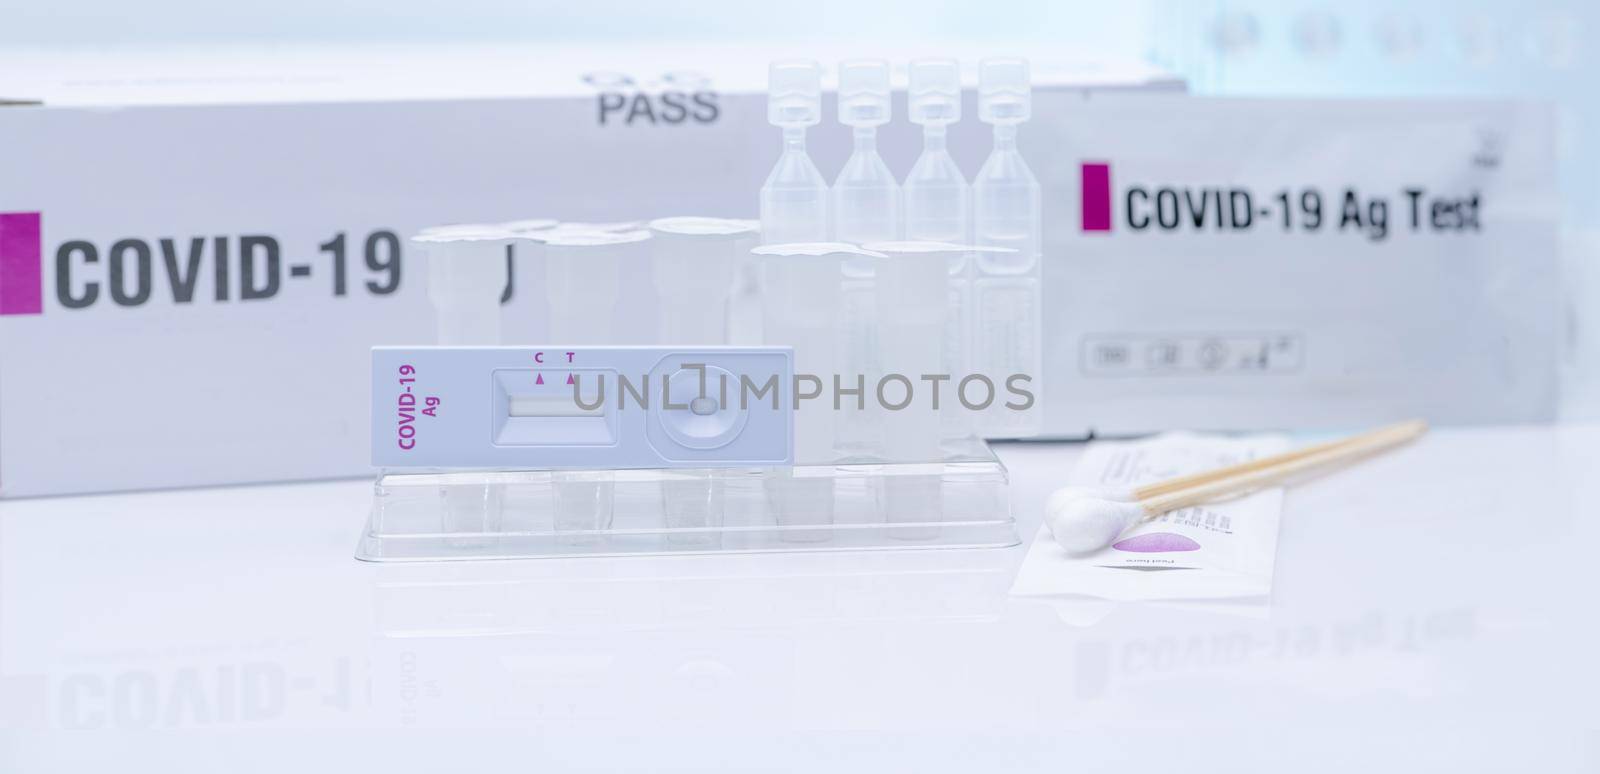 Covid 19 antigen self test for nasal swab. Antigen test kit for home use to detection coronavirus infection. Rapid antigen test. Corona virus diagnosis. Medical device for covid-19 Antigen test.